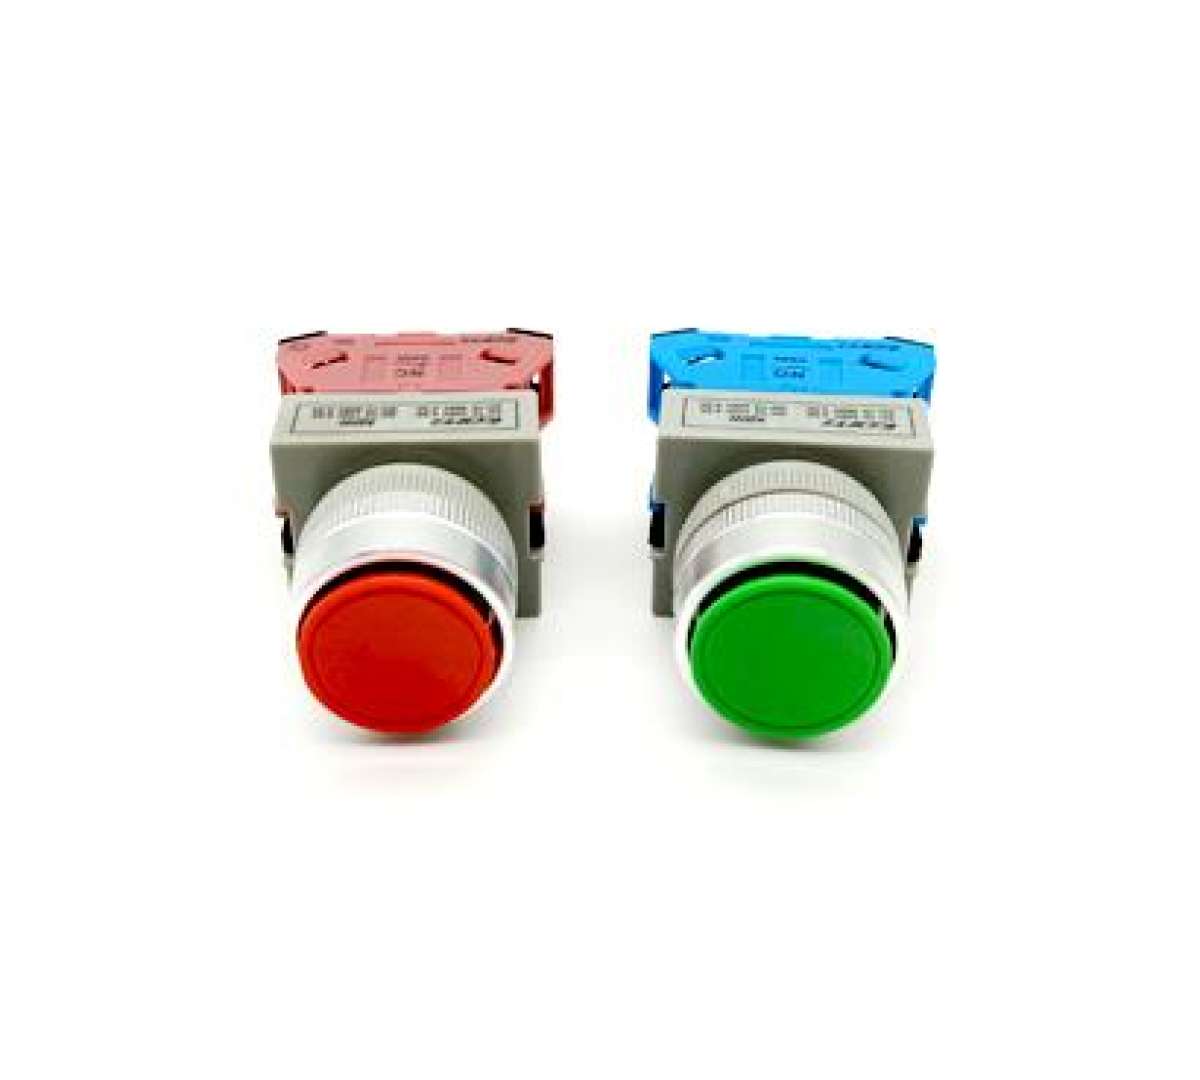 Push button 22 mm IEC resent. Кнопка 22 ультра. Ill Pushbutton DBL Green i Red o 1no/1nc kod eksportowy HS 85365080. Кнопки 22 мм